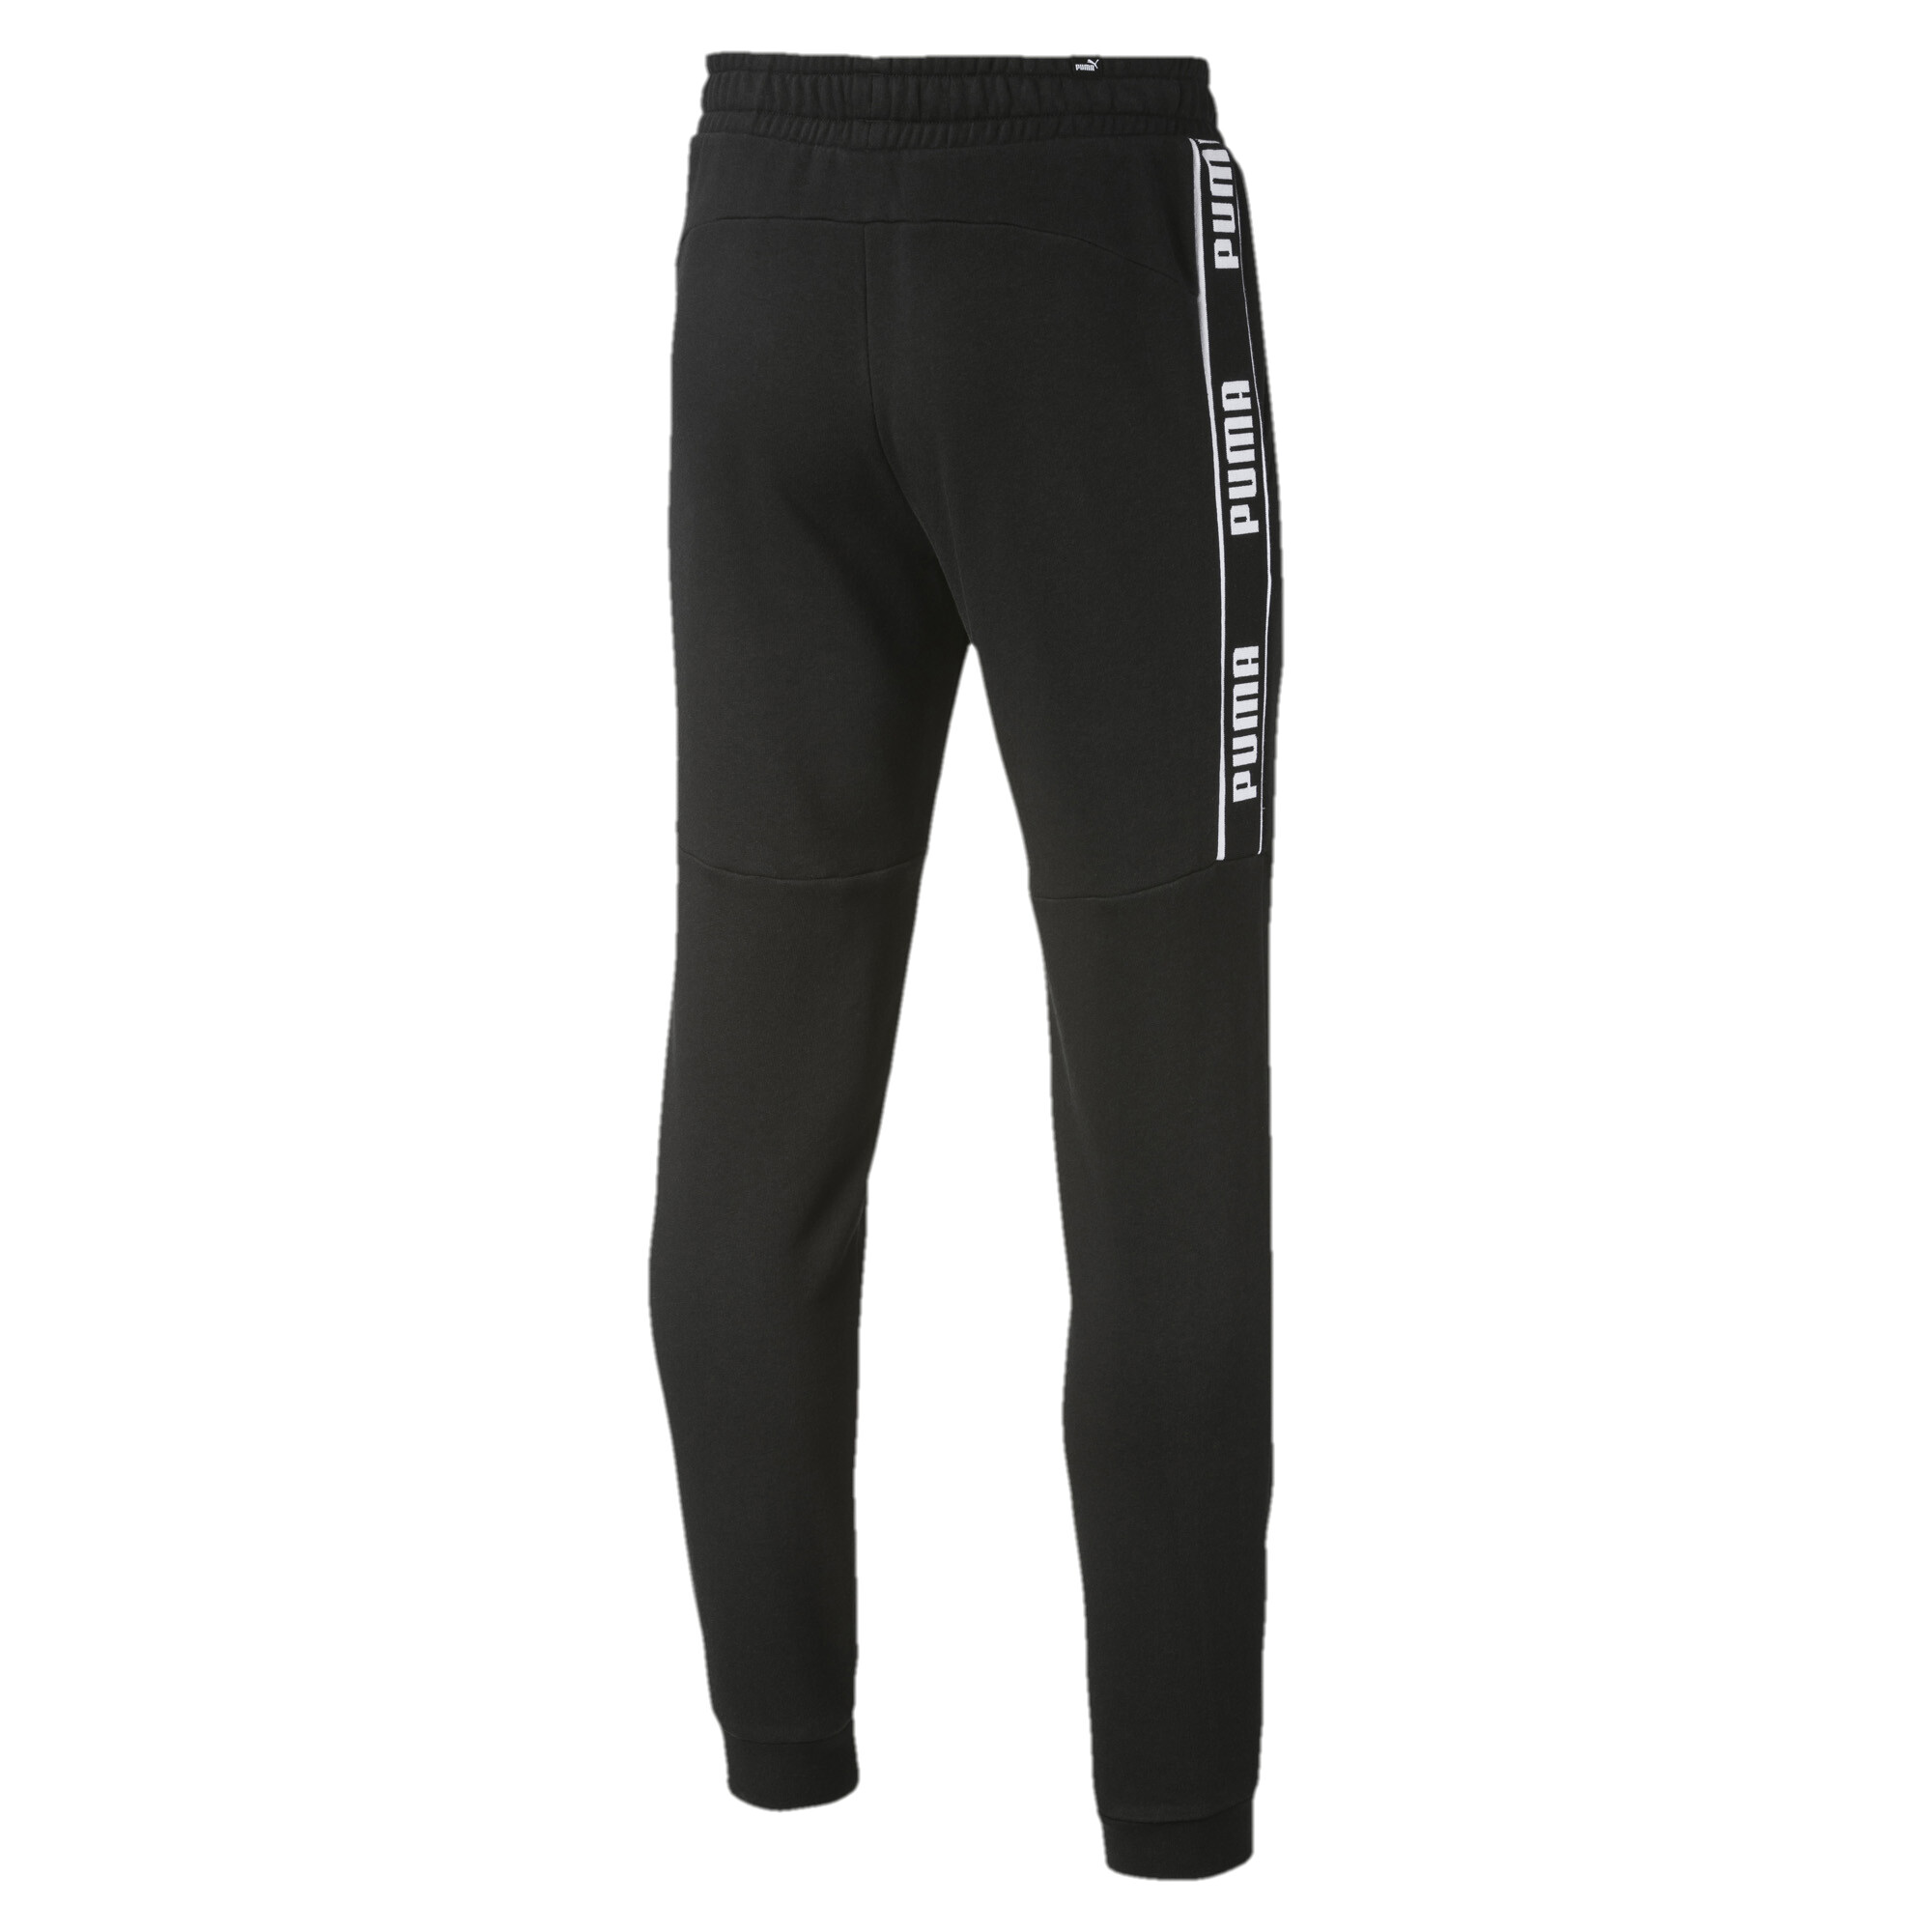 Men's Puma Amplified's Sweatpants, Black, Size XL, Clothing